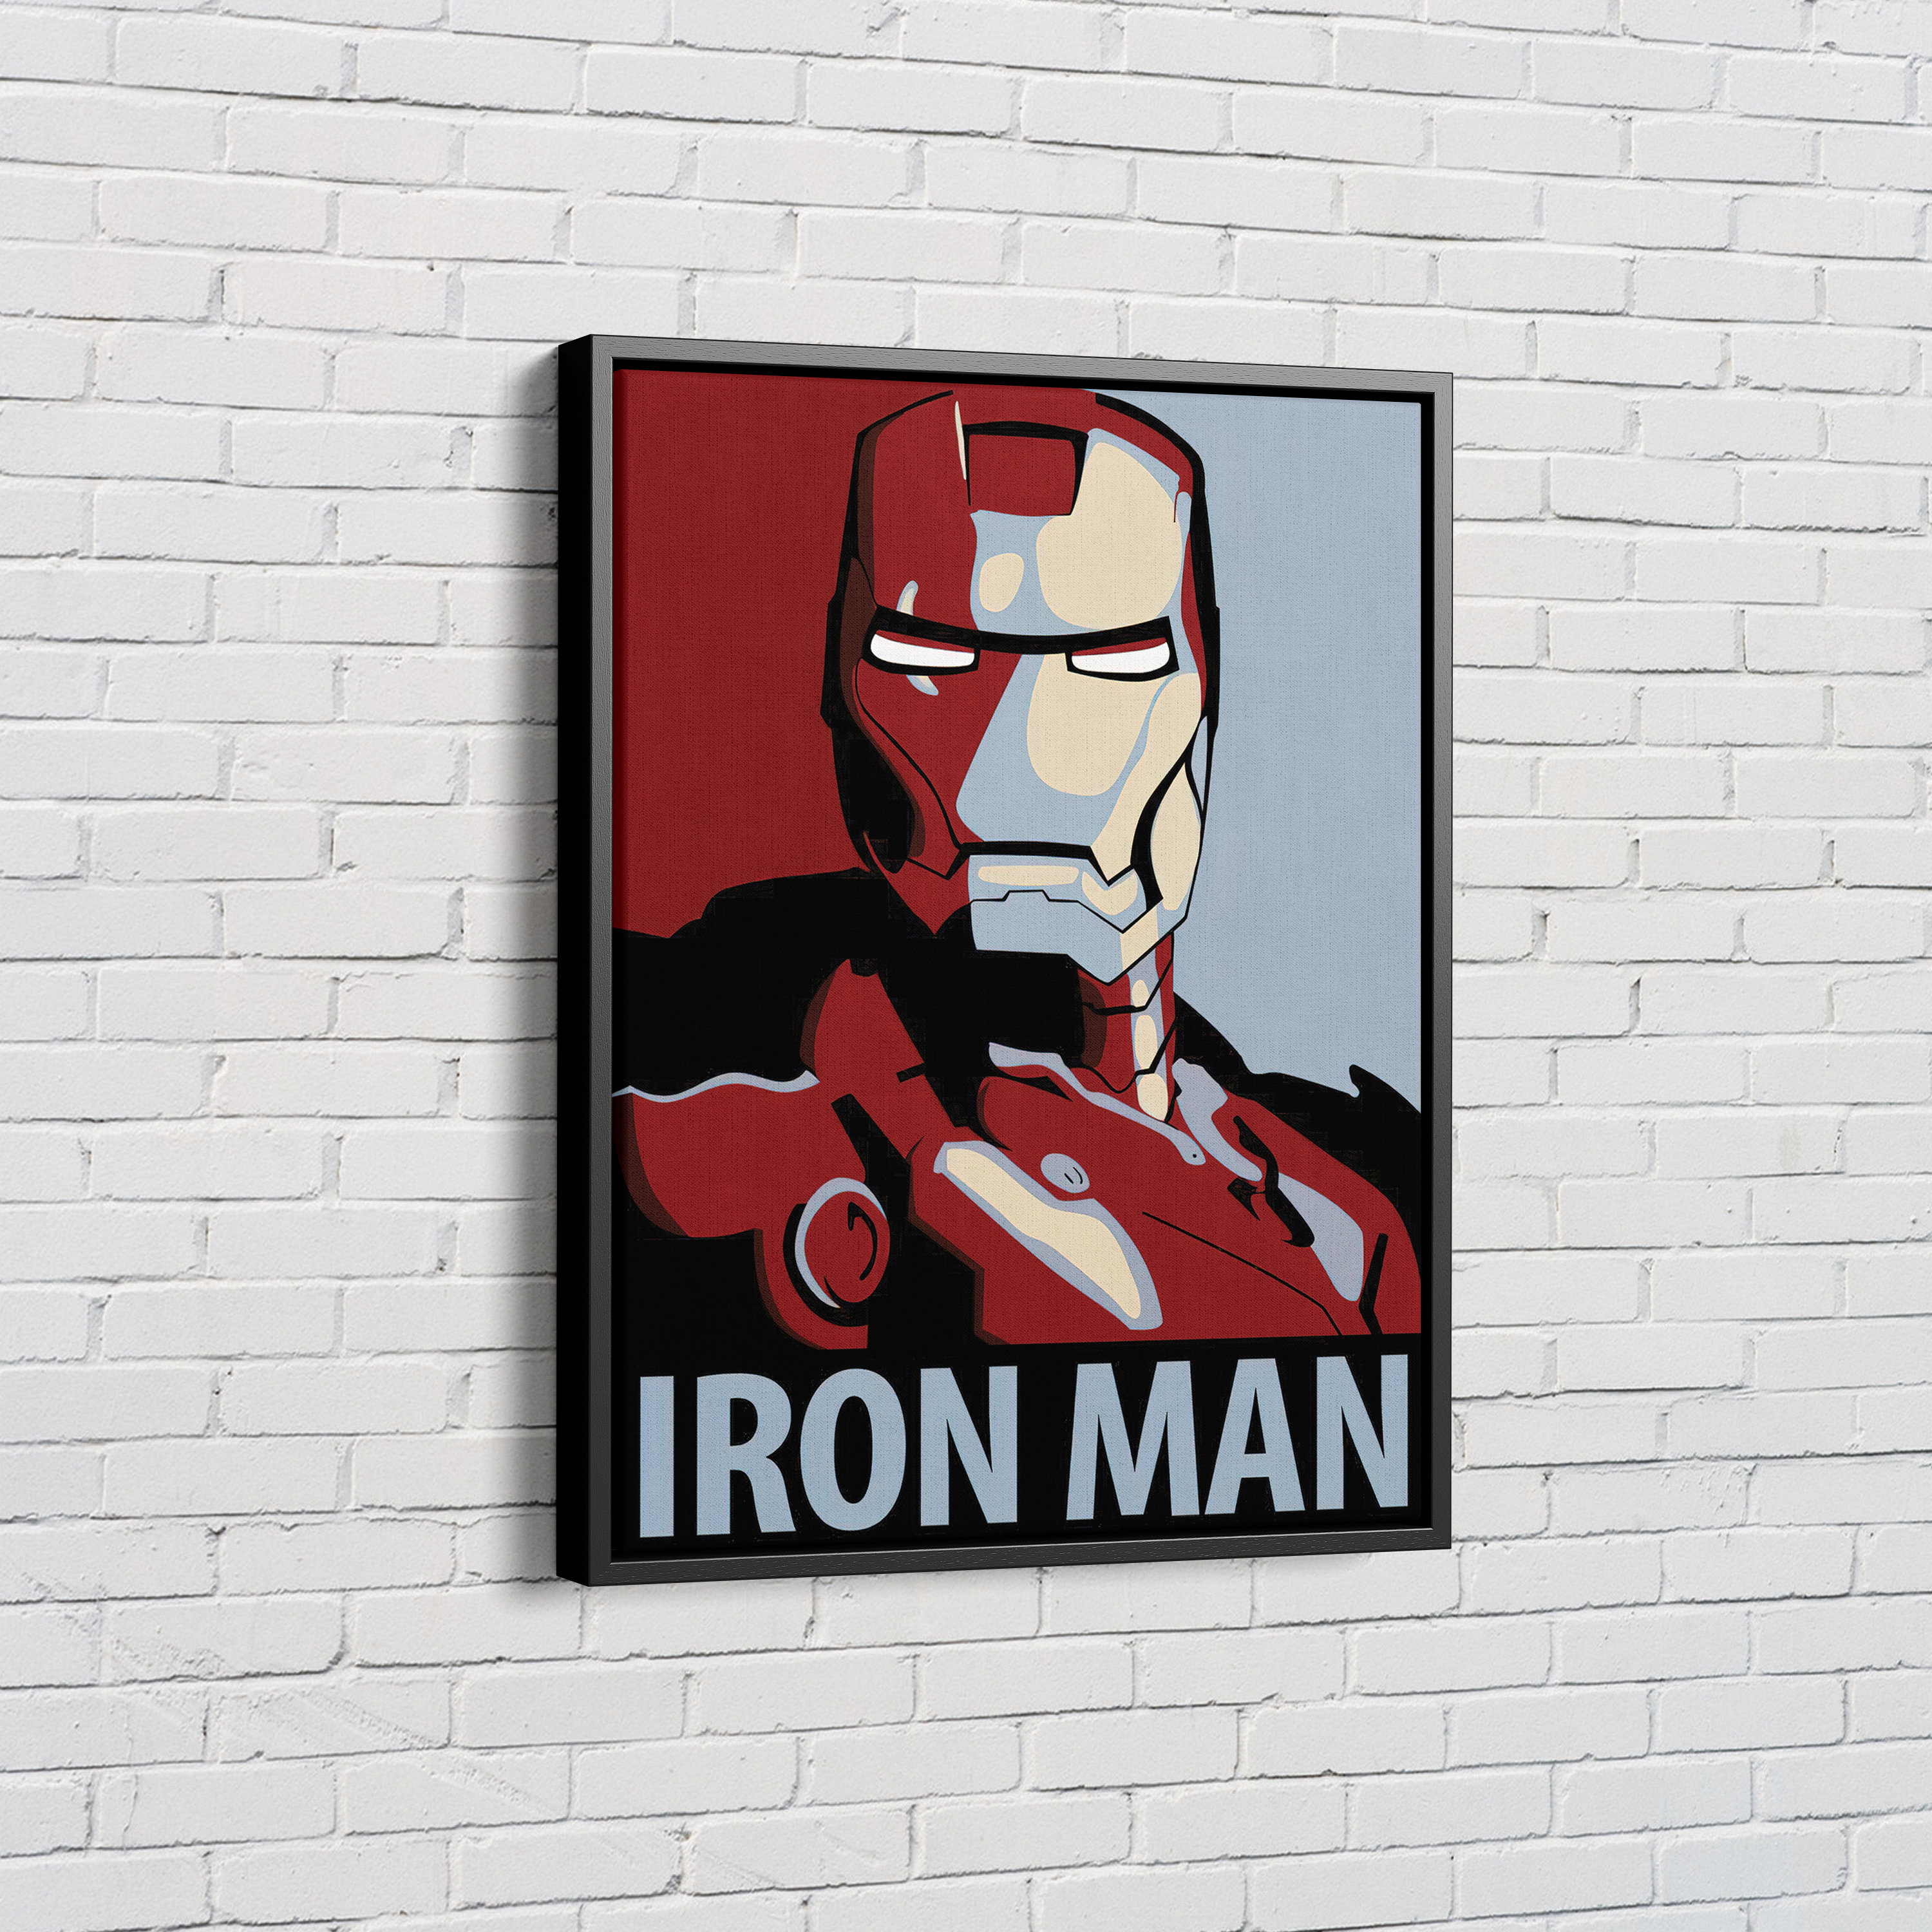 Super Hero Iron Man Avengers End Game Art Wall - POSTER 20x30